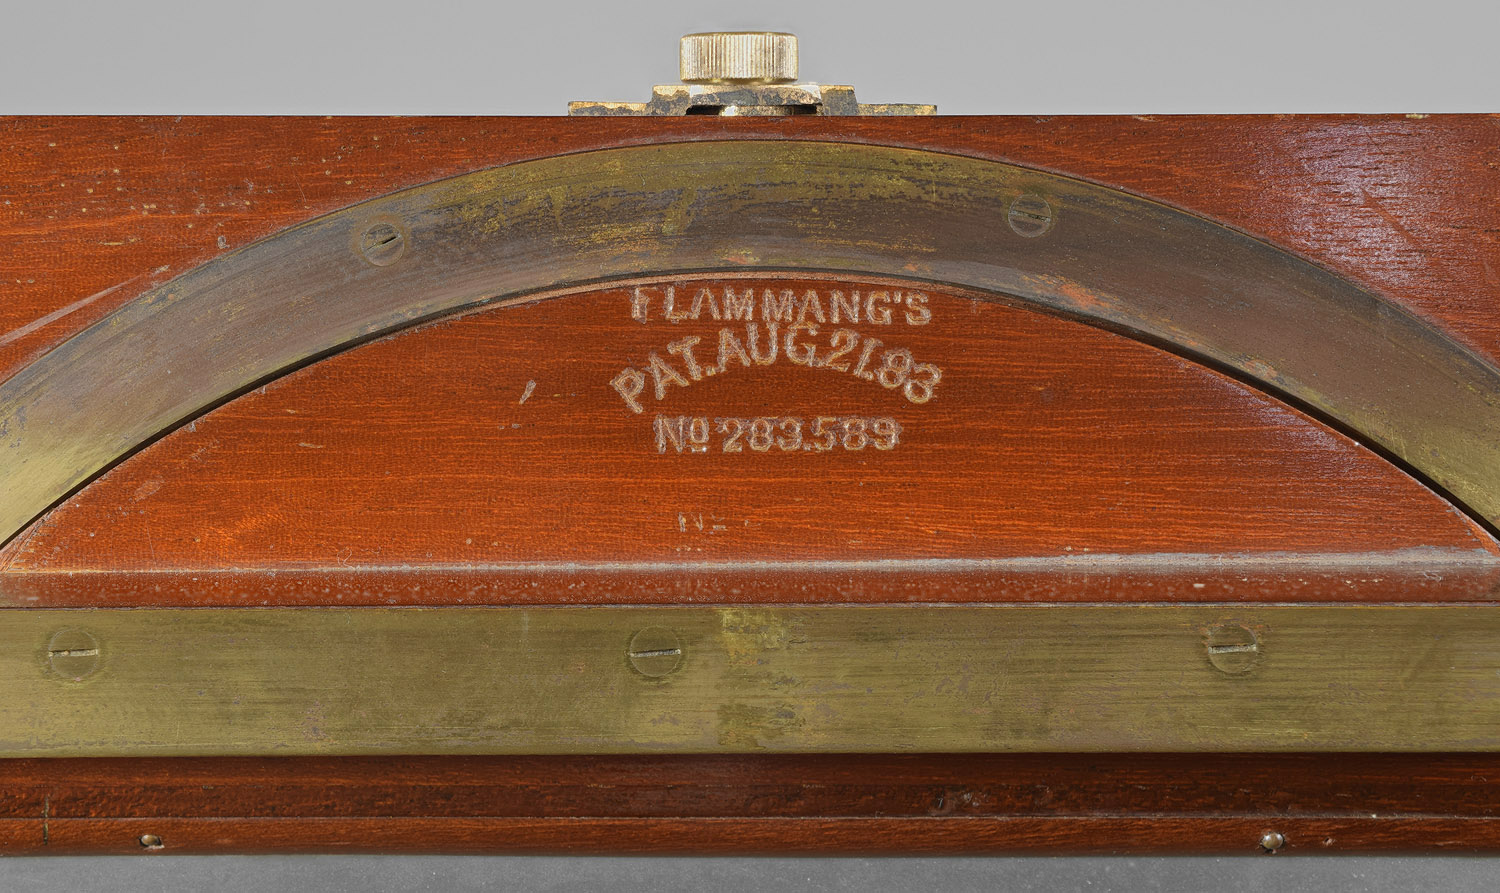 1196.american.optical.flammangs.rear.focus.var.2-5x8-stamp.flammangs.revolving.patent.upper.back.standard-1500.jpg